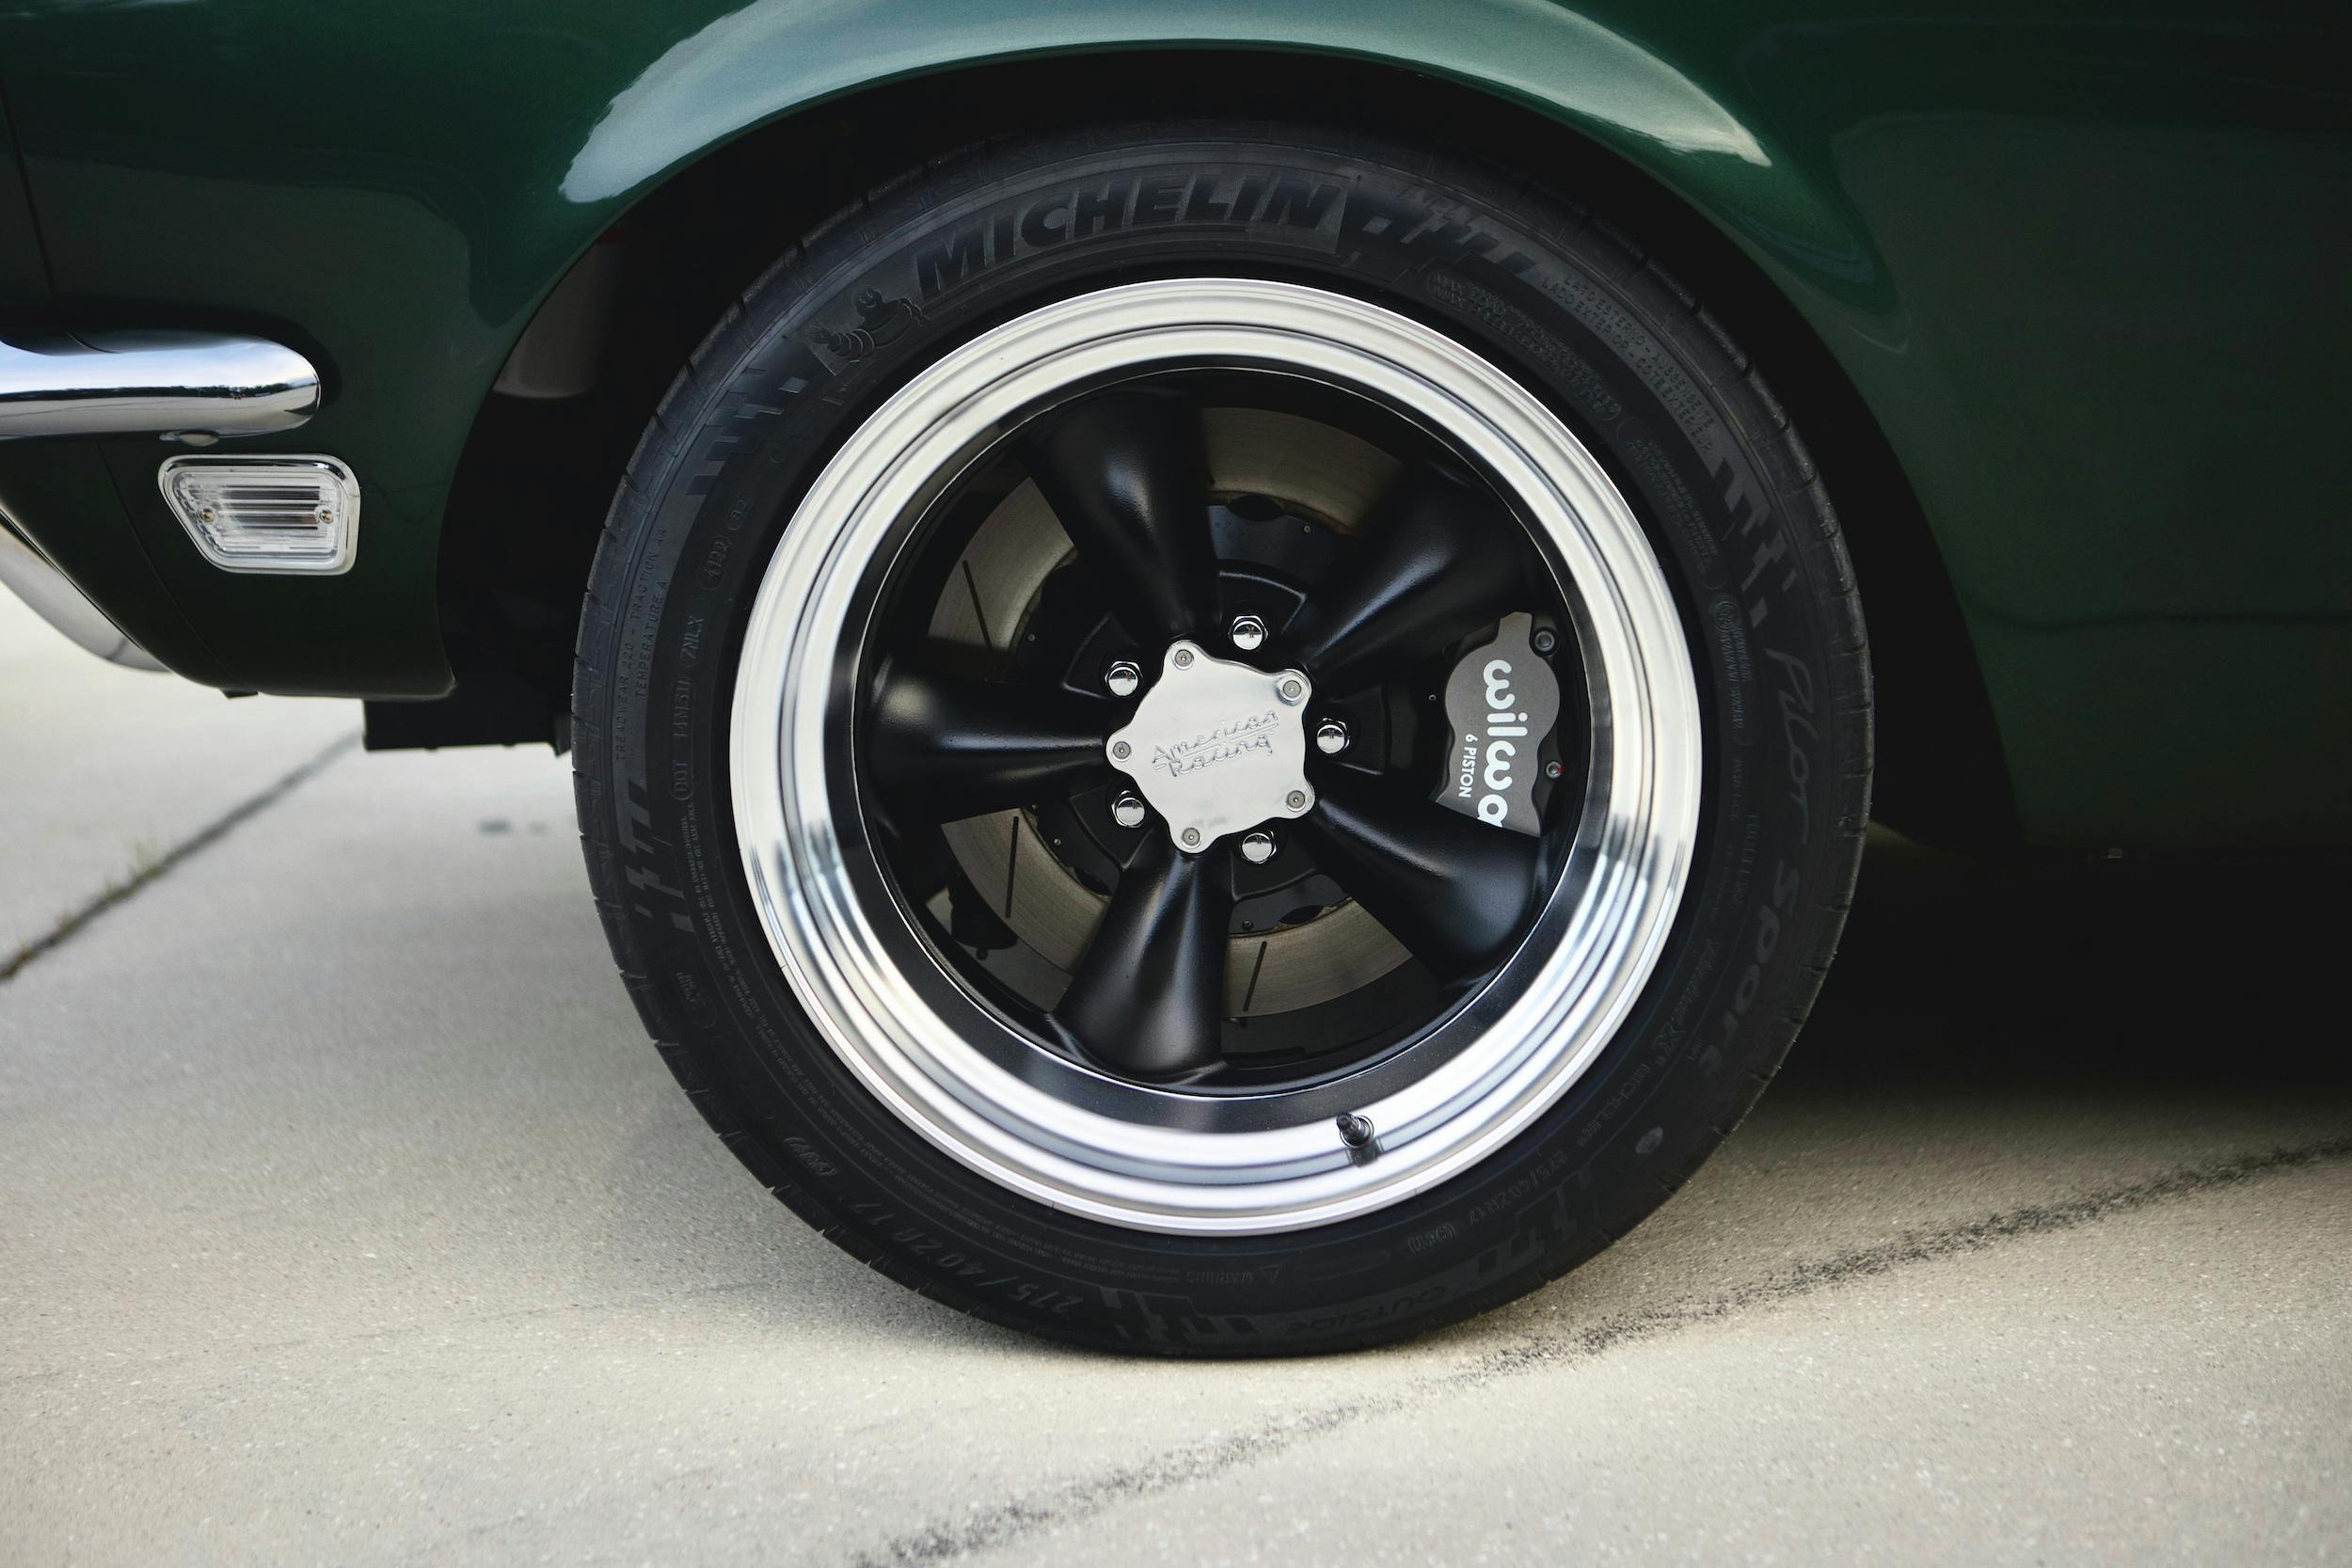 Revology 1968 Mustang GT Cobra Jet wheel tire